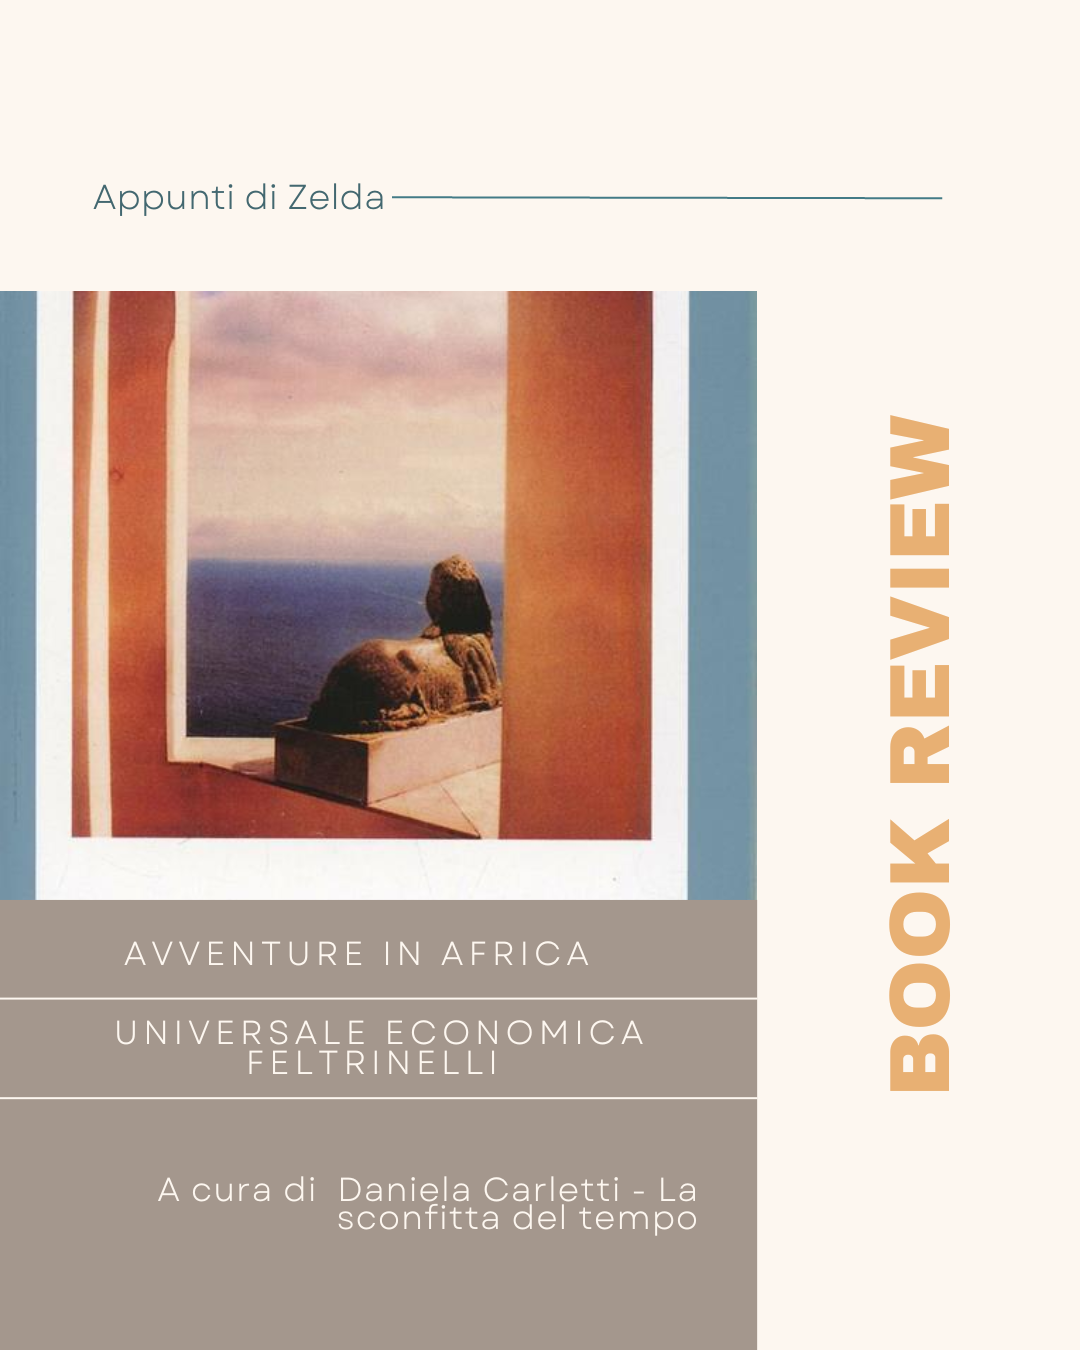 Avventure in Africa di Gianni Celati - Universale Economica Feltrinelli